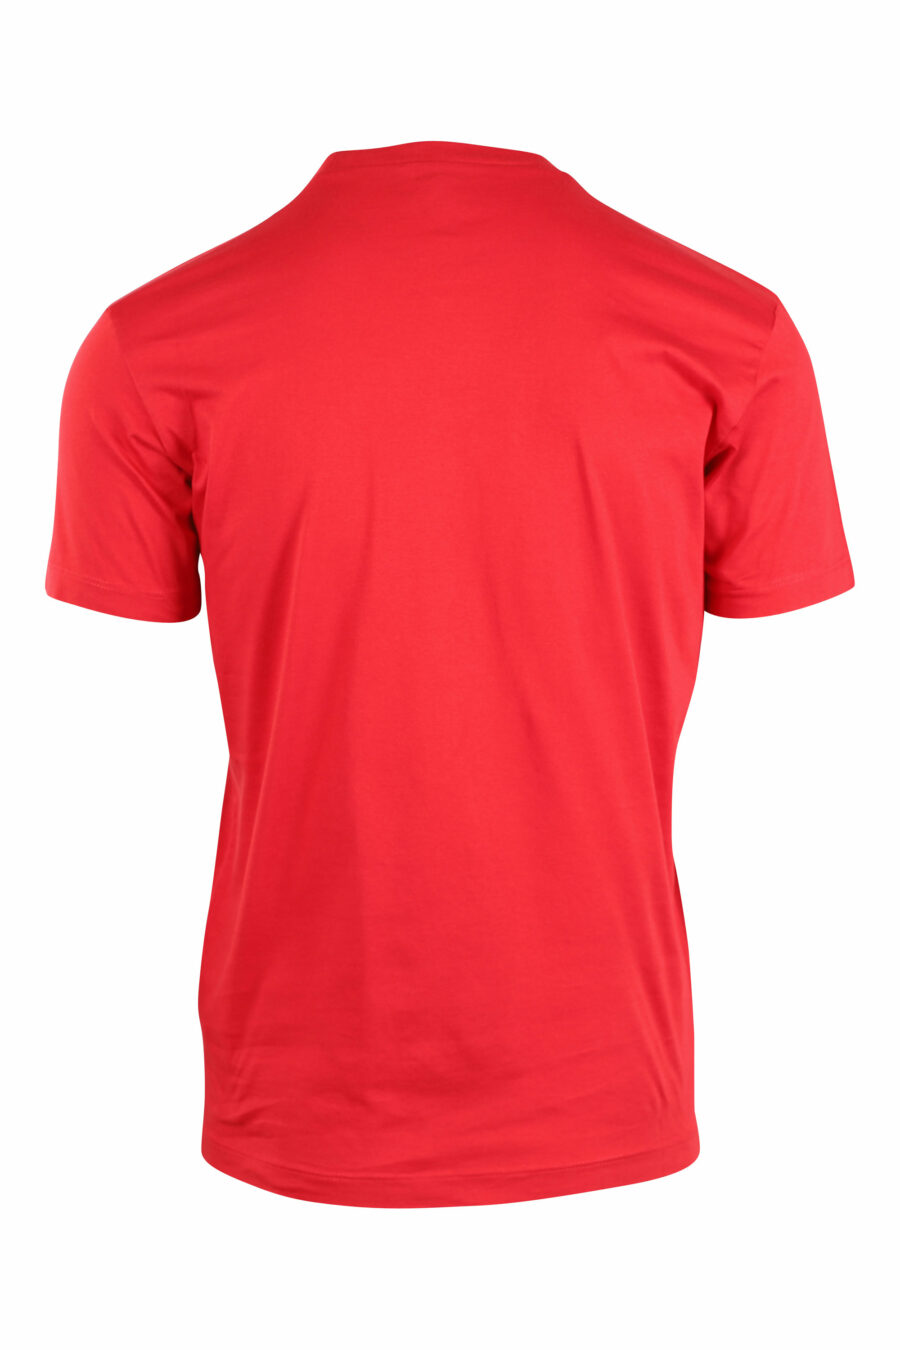 Rotes T-Shirt mit Maxillover und Blatt - IMG 2642